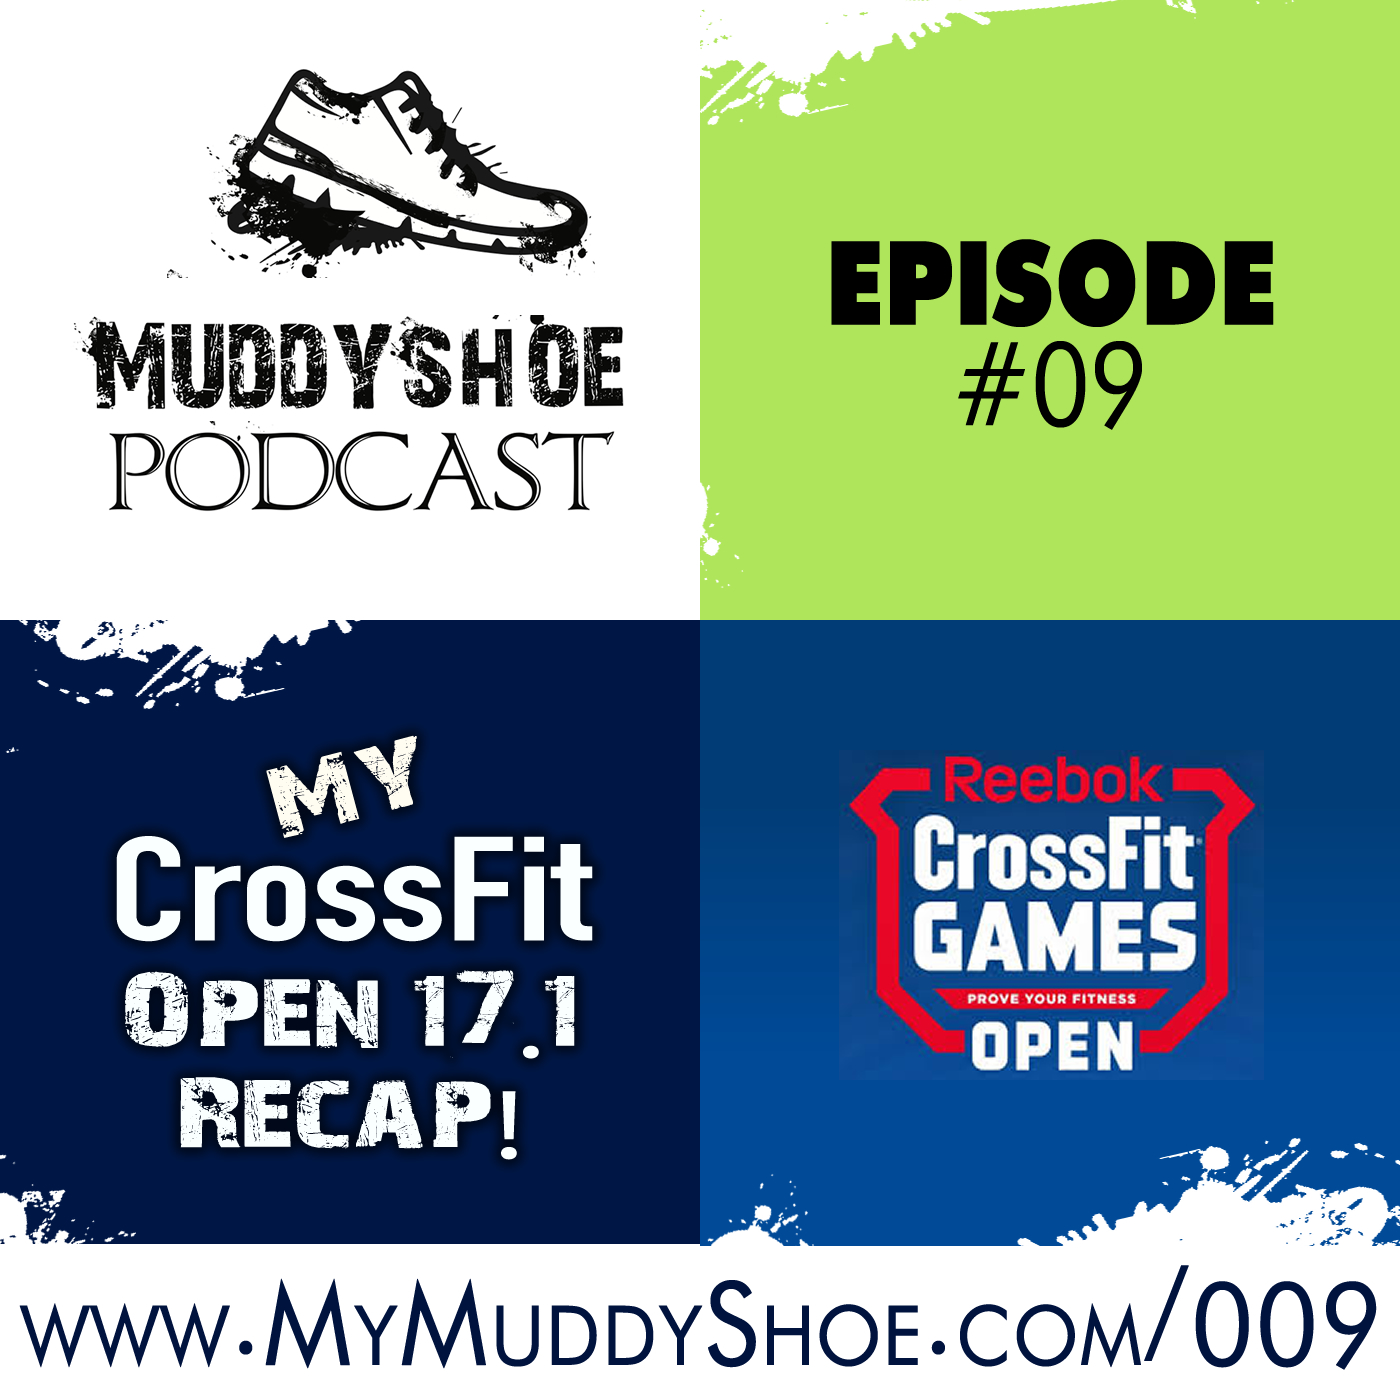 The Muddy Shoe #09 - My CrossFit Open 17.1 Recap!